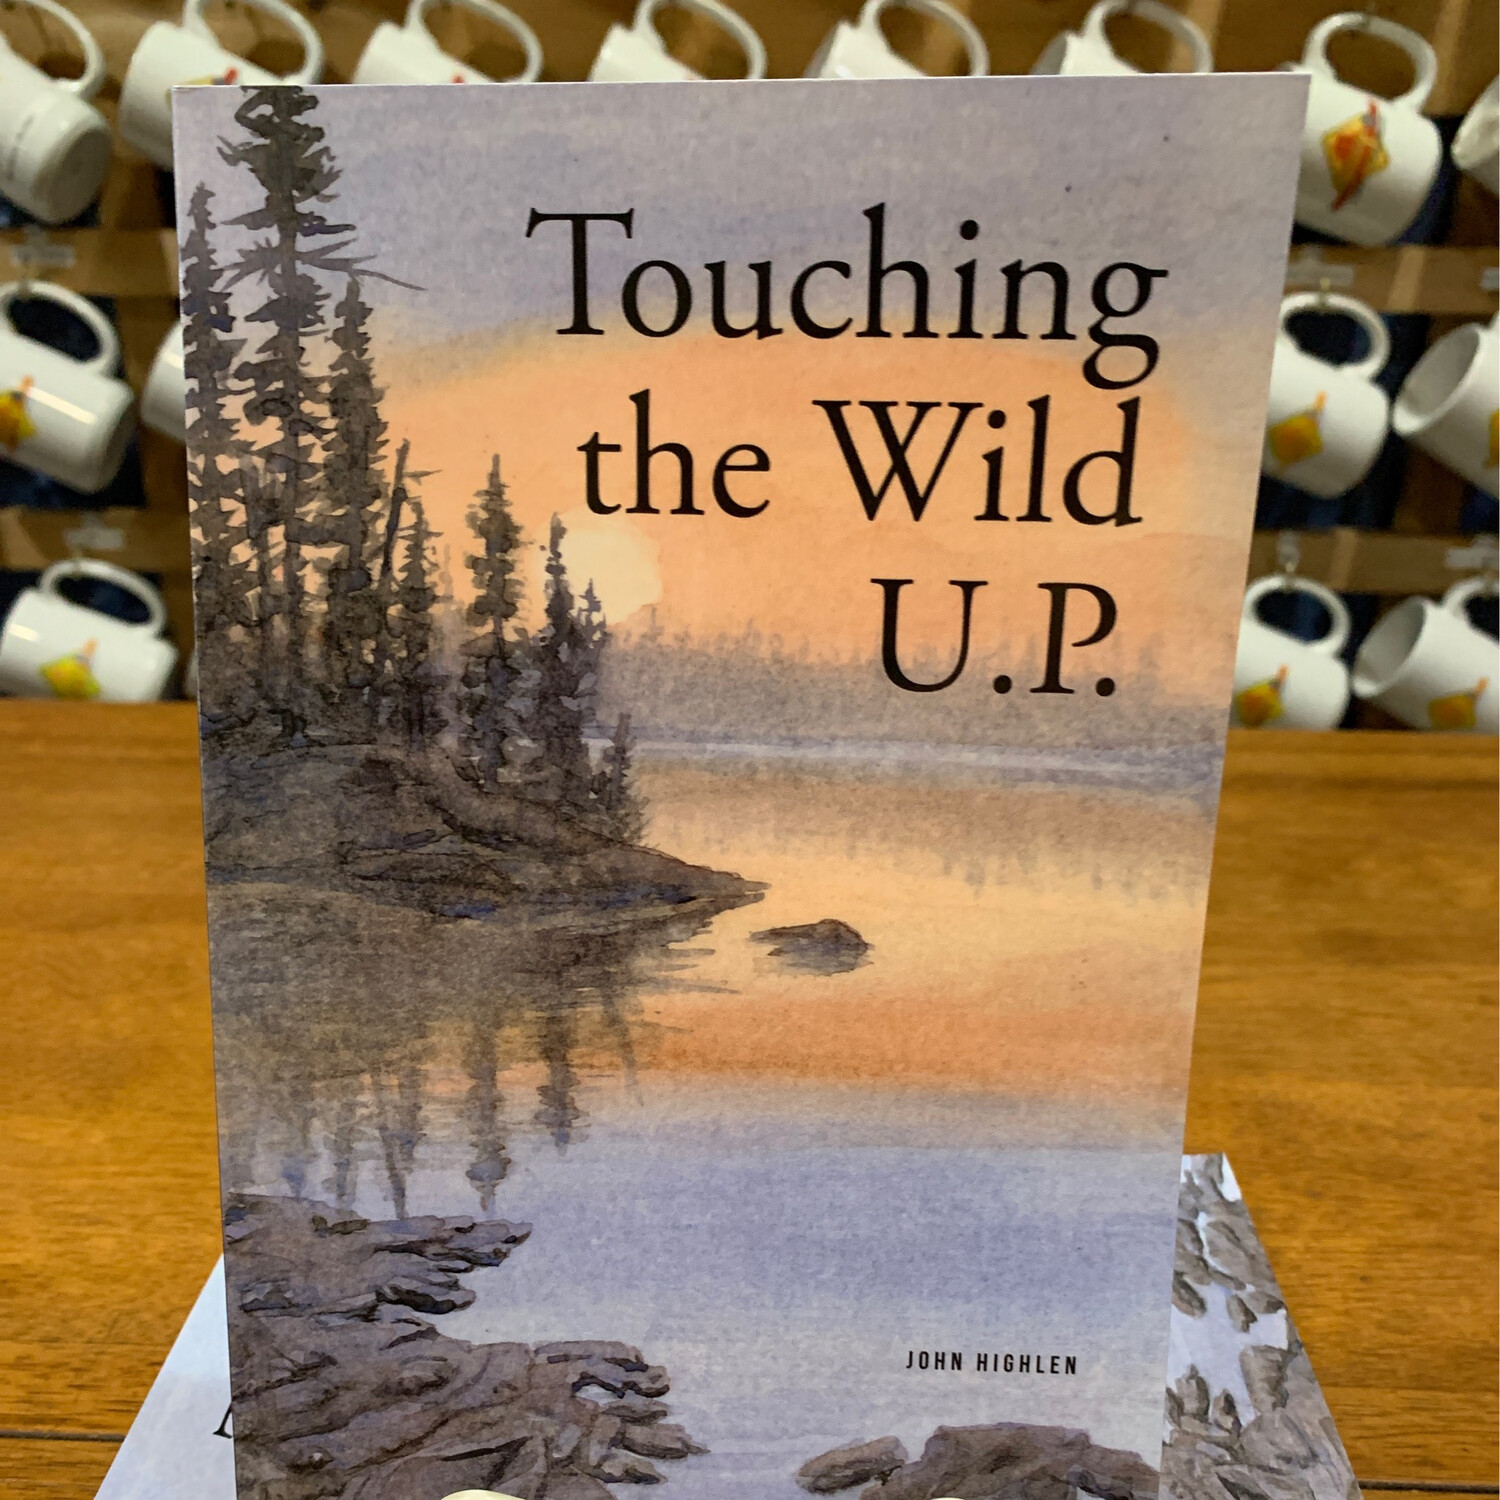 Touching the Wild U. P. by John Highlen